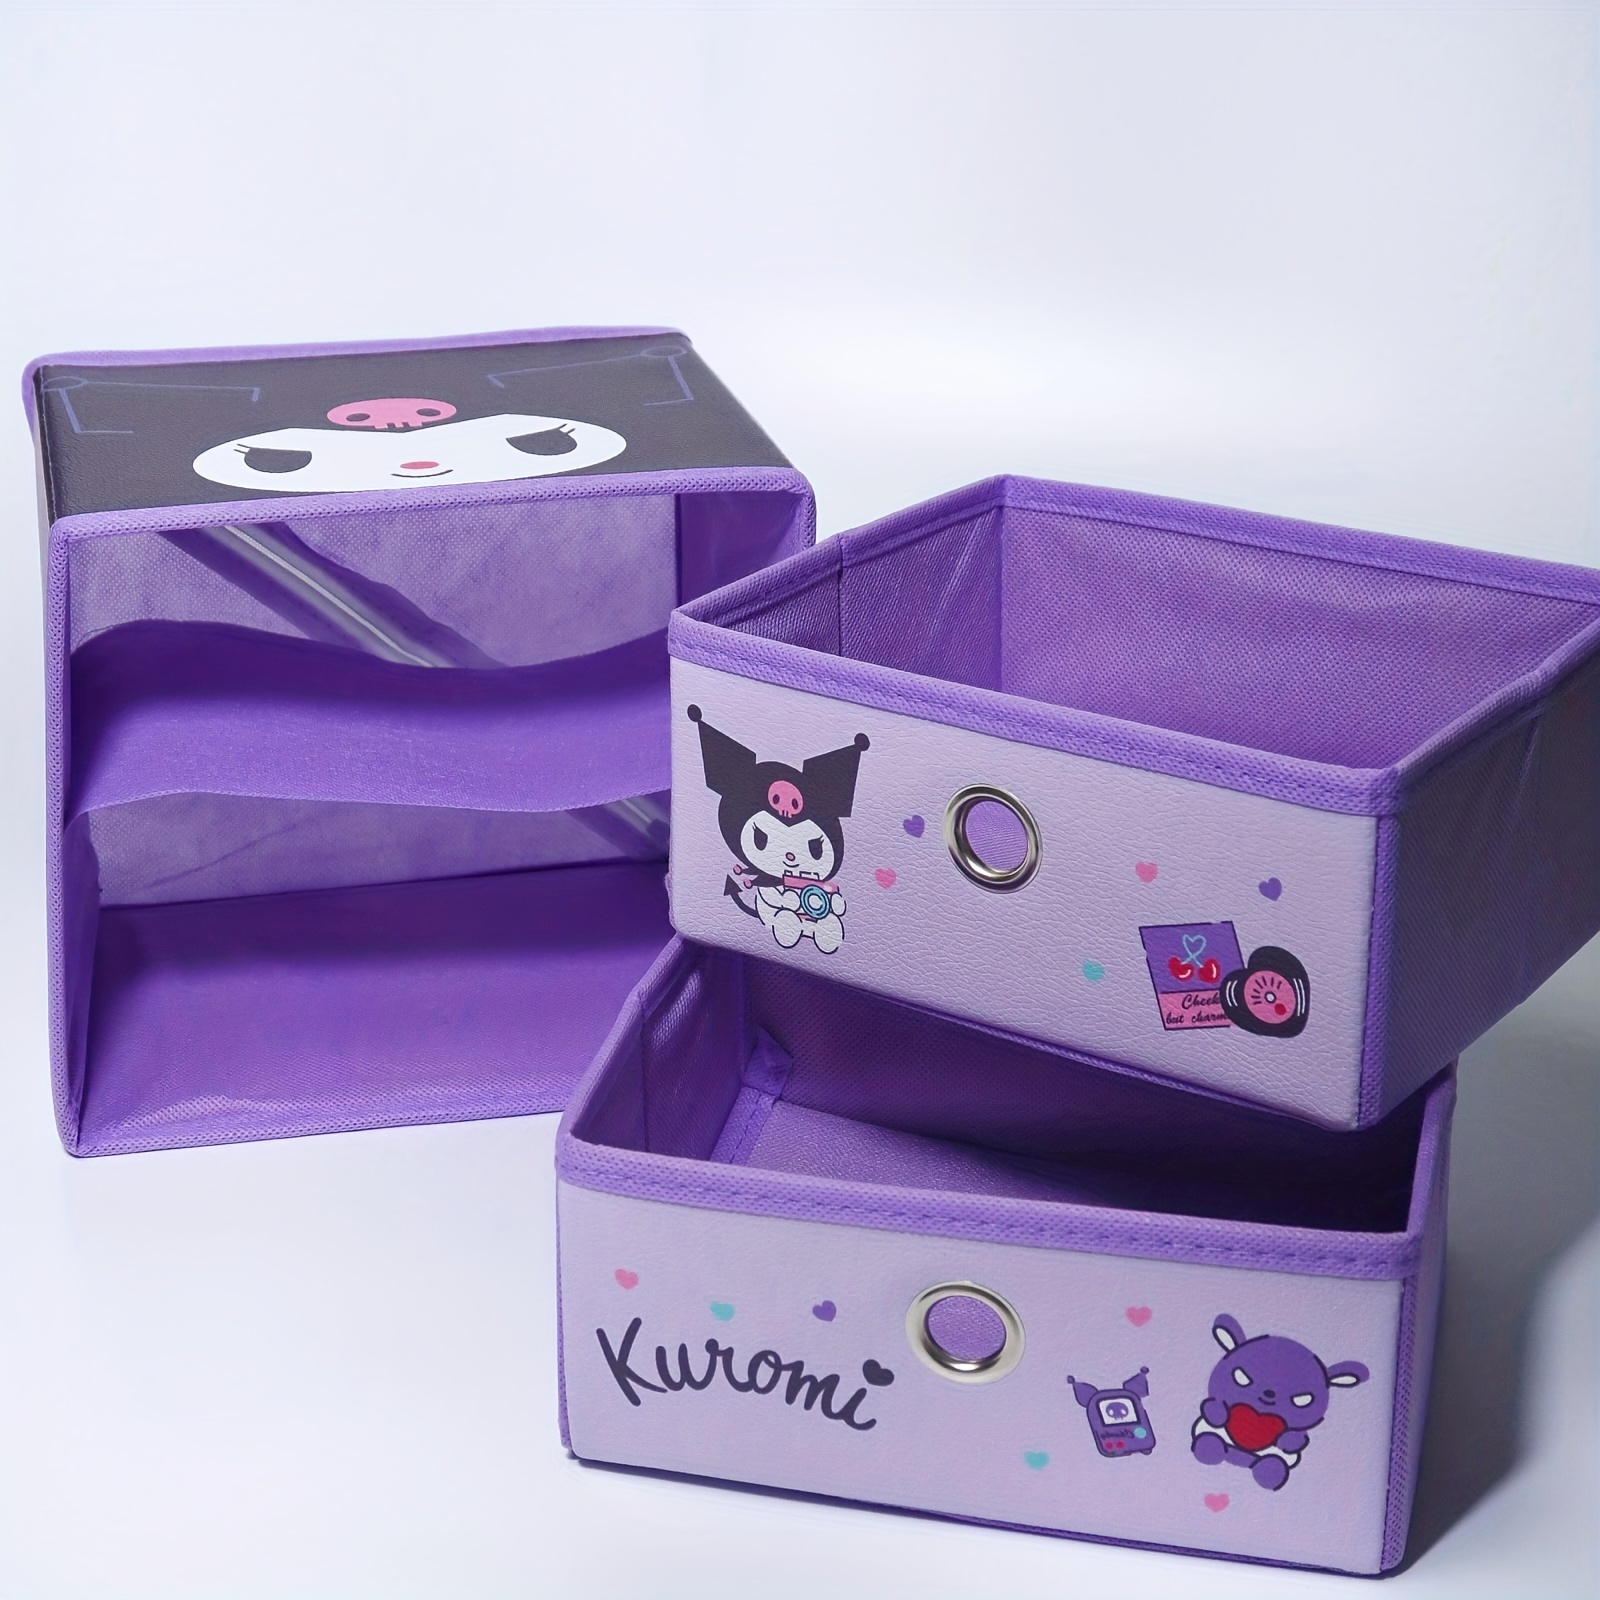 Kuromi Carousel Foldable Storage Box - Kawaii Panda - Making Life